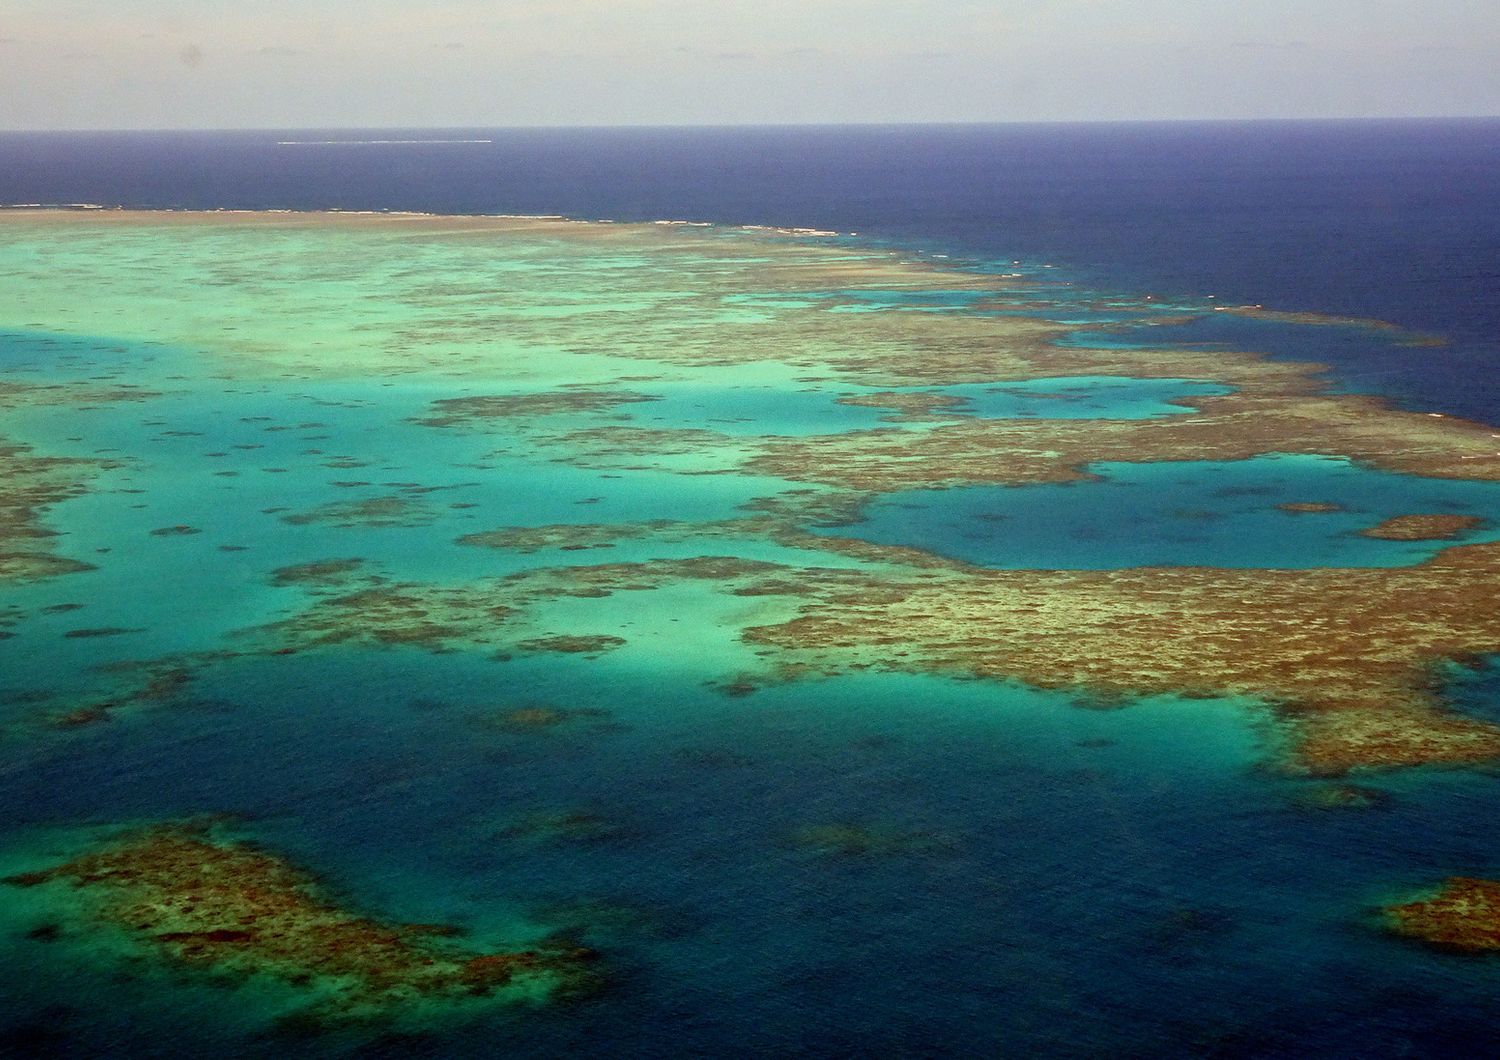 Barriera corallina australiana